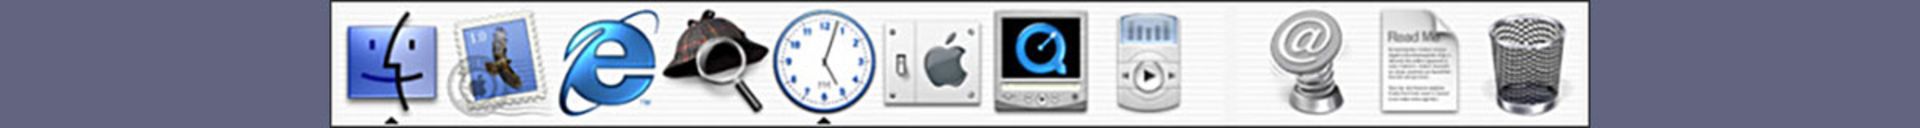 داک اپلیکیشن‌ها در Mac OS X Public Beta